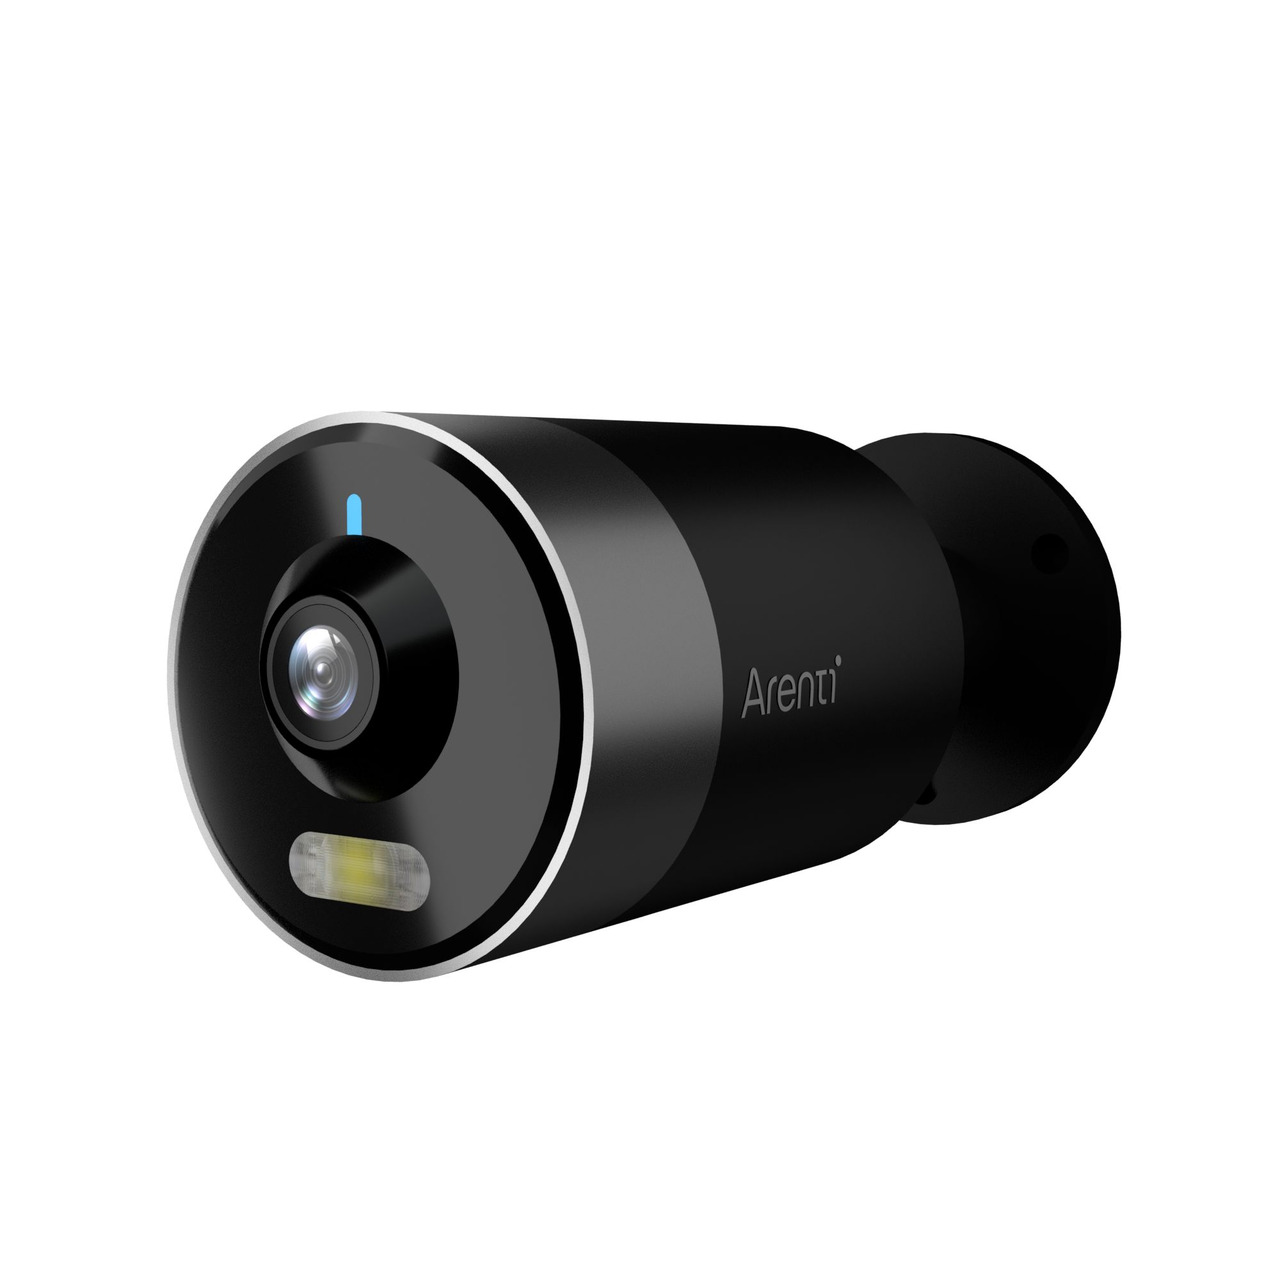 Arenti WLAN-Outdoor-berwachungskamera OUTDOOR1- 2K-Auflsung- App-Zugriff- Amazon Alexa